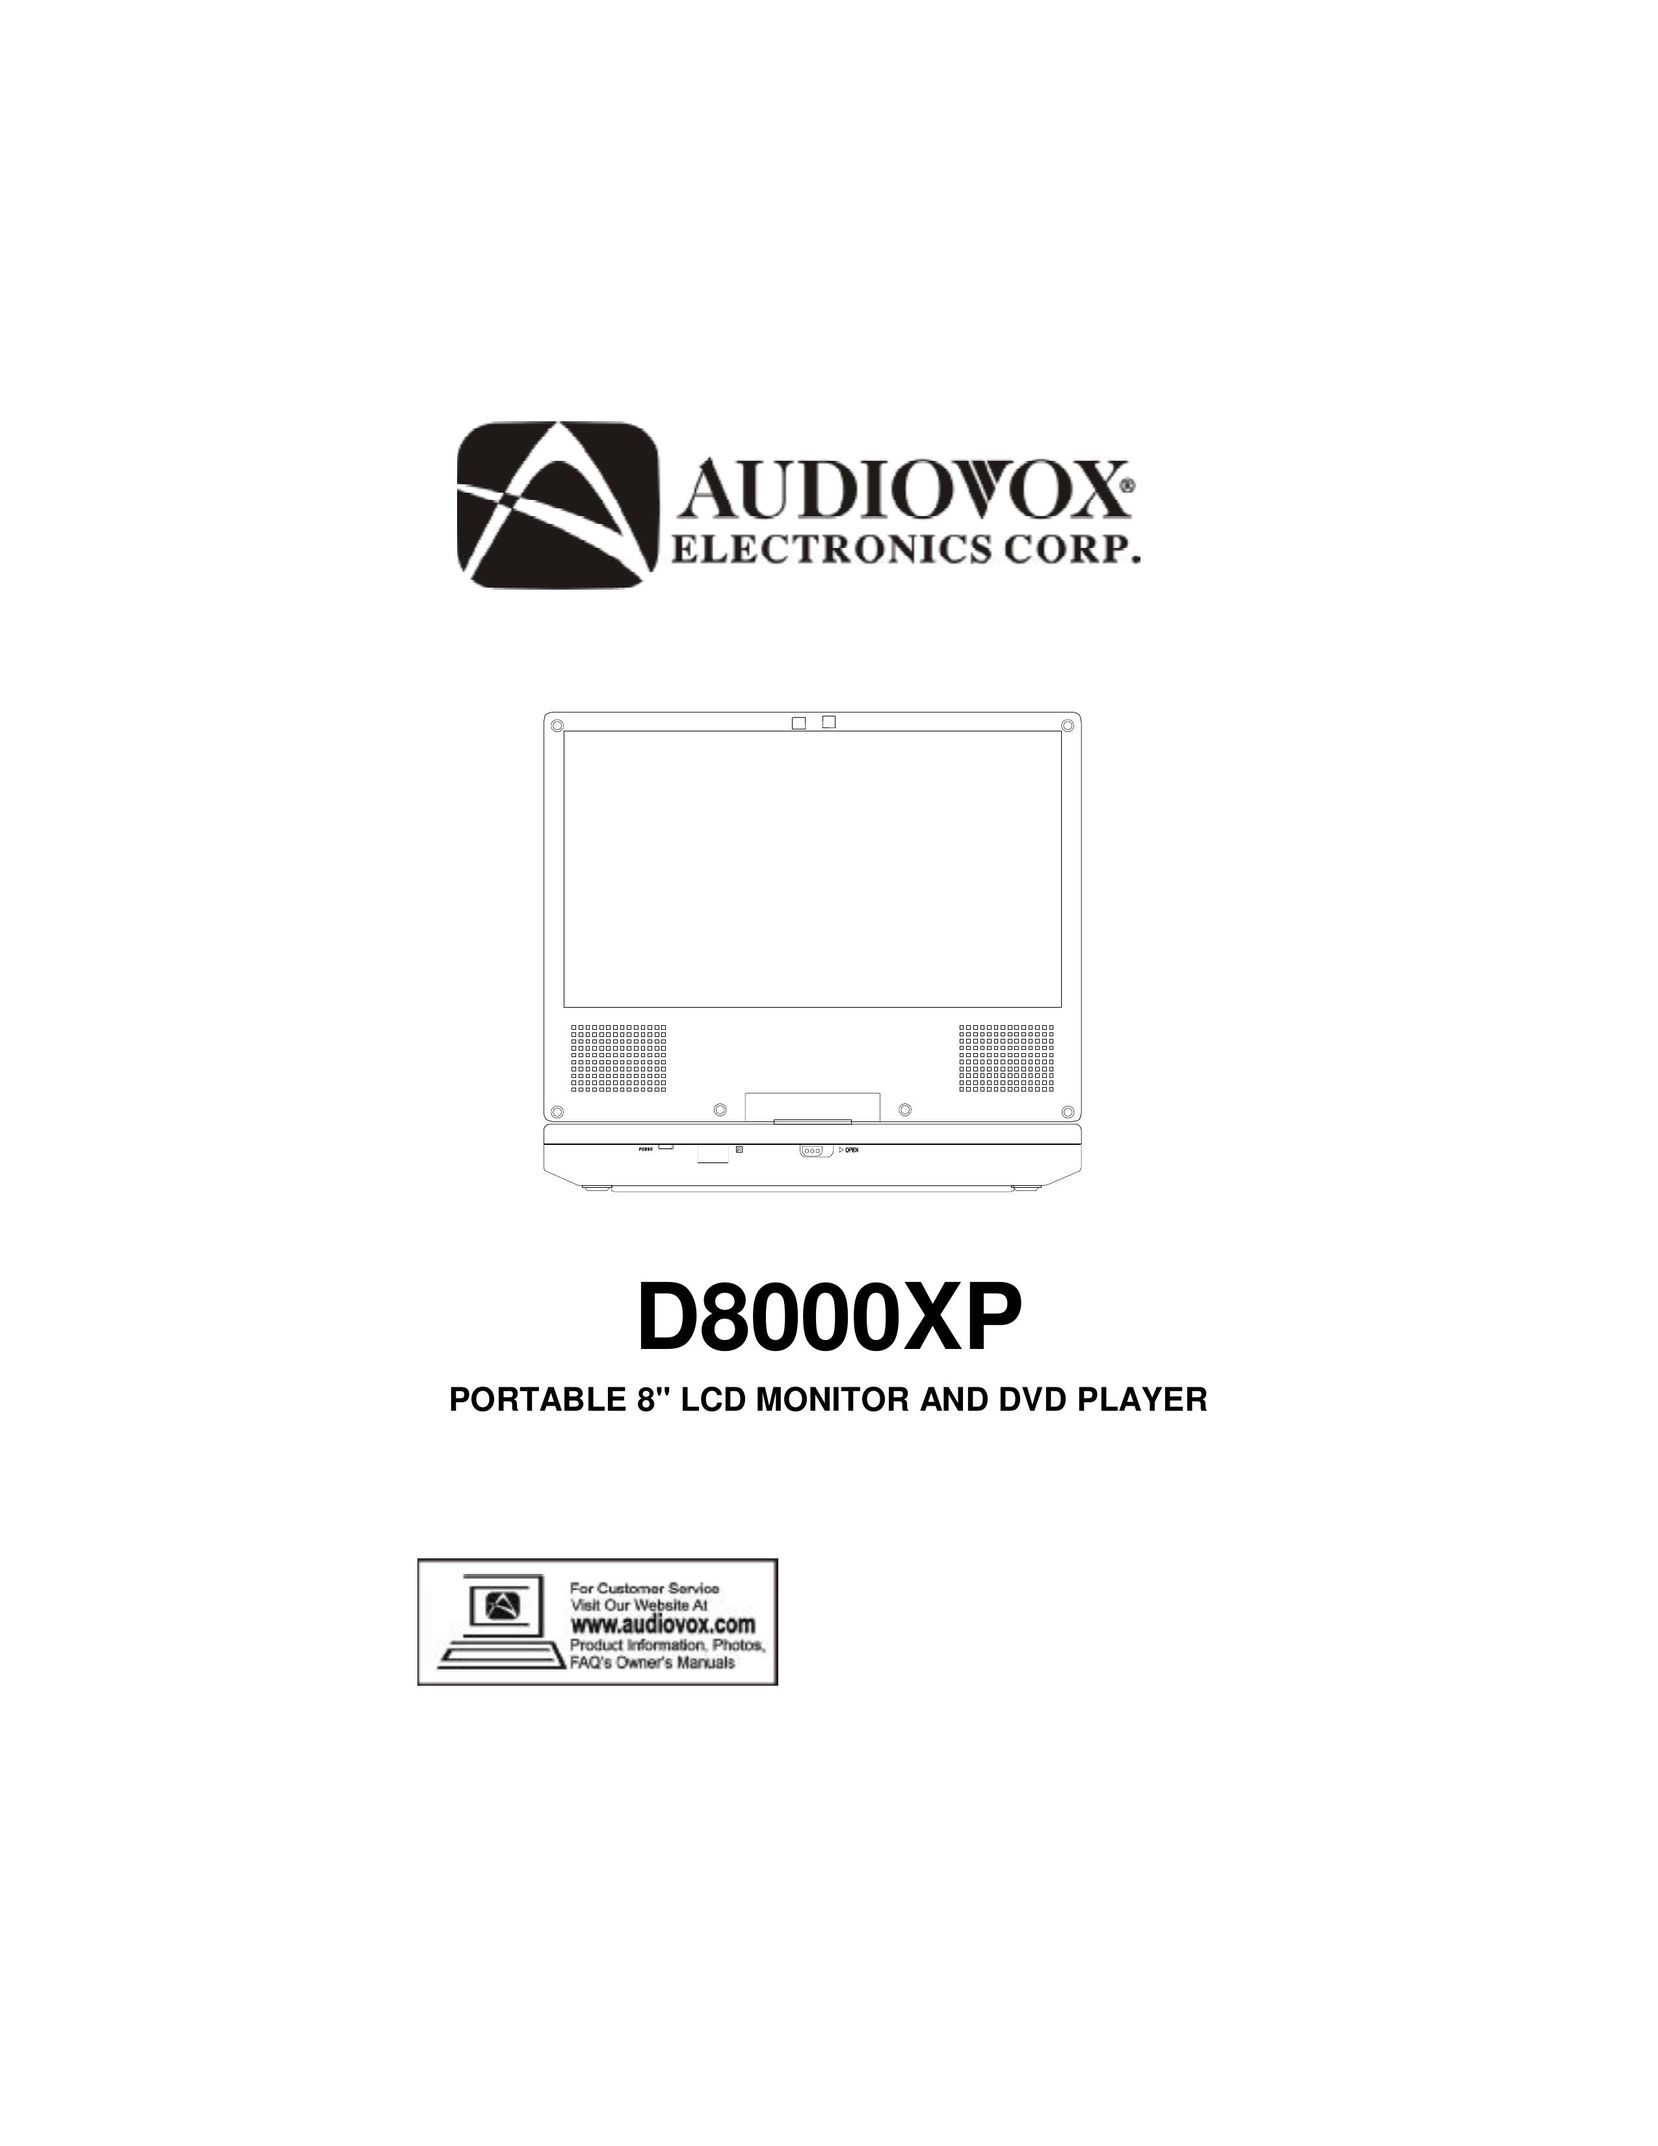 Audiovox D8000XP DVD Player User Manual